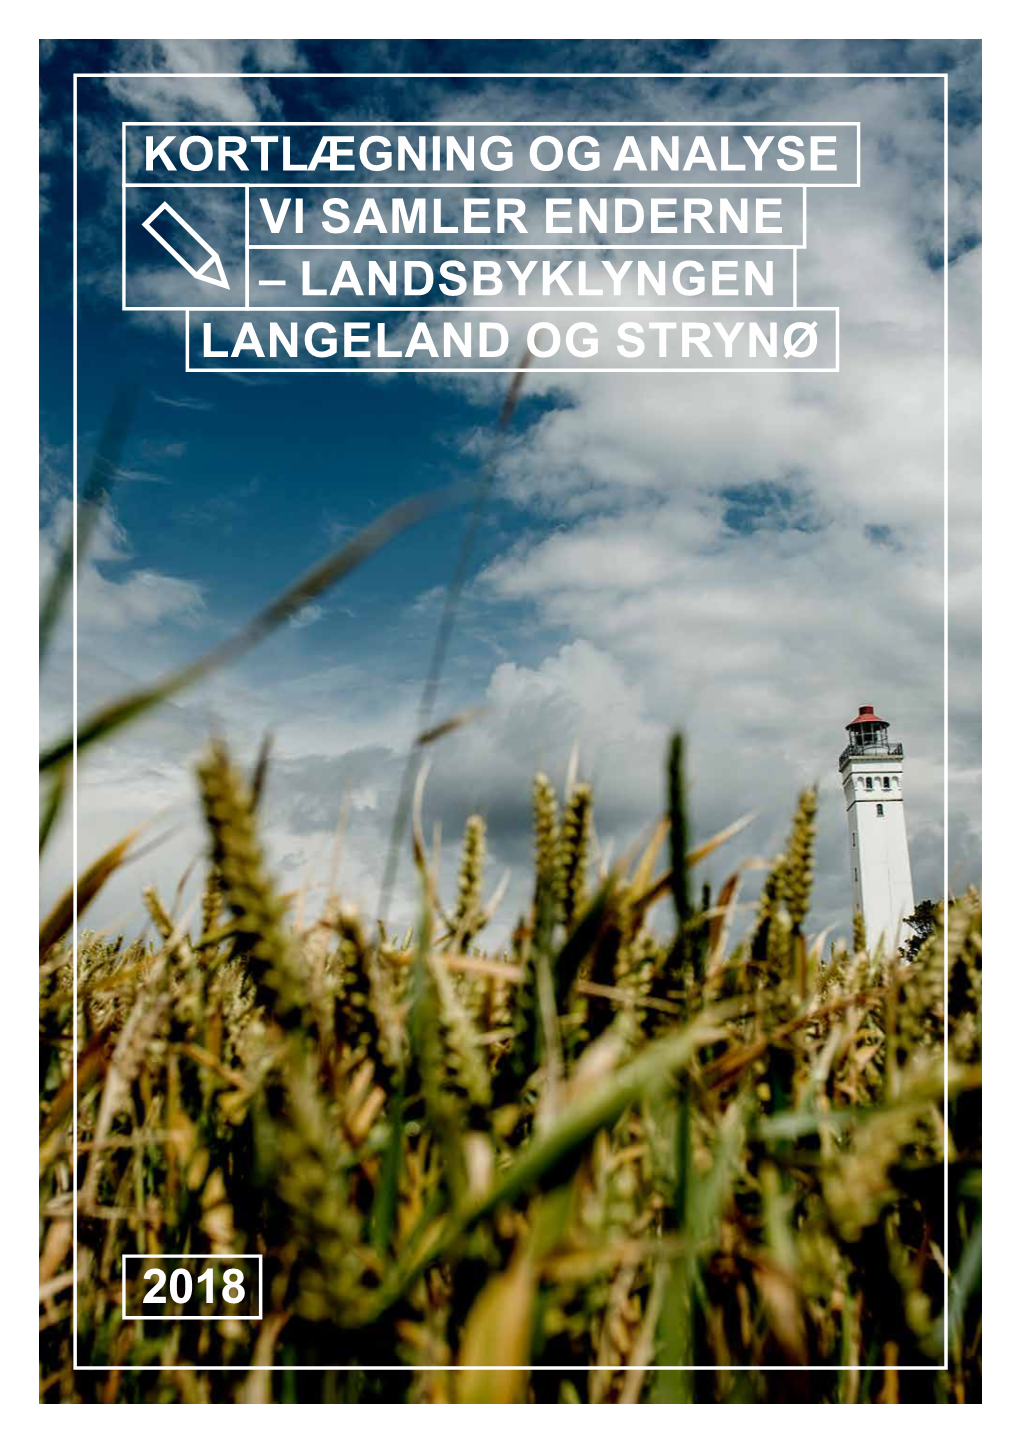 Landsbyklyngen Langeland Og Strynø